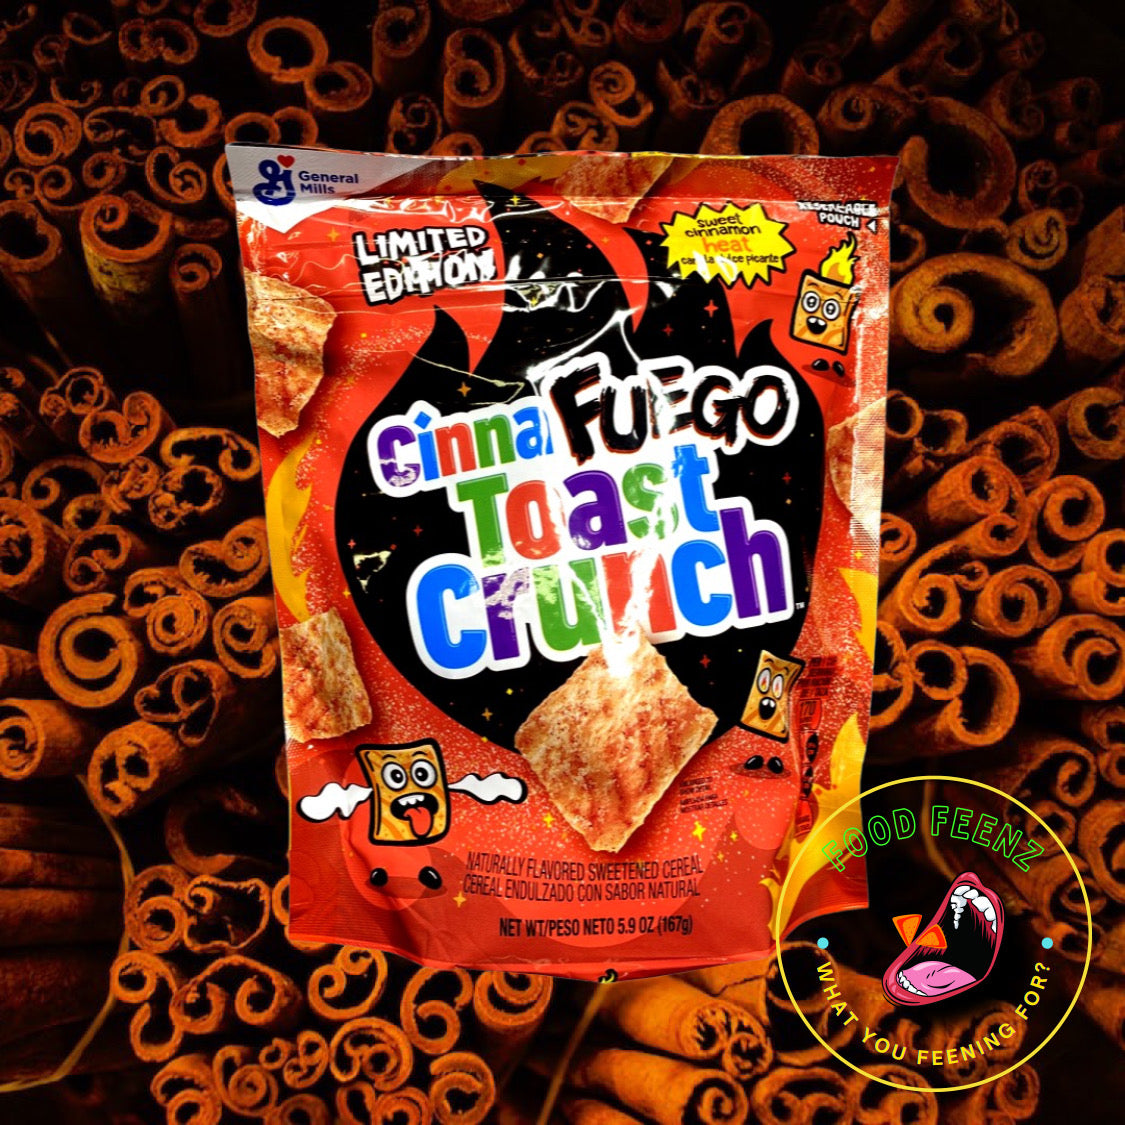 Cinna Fuego Toast Crunch - Limited Edition